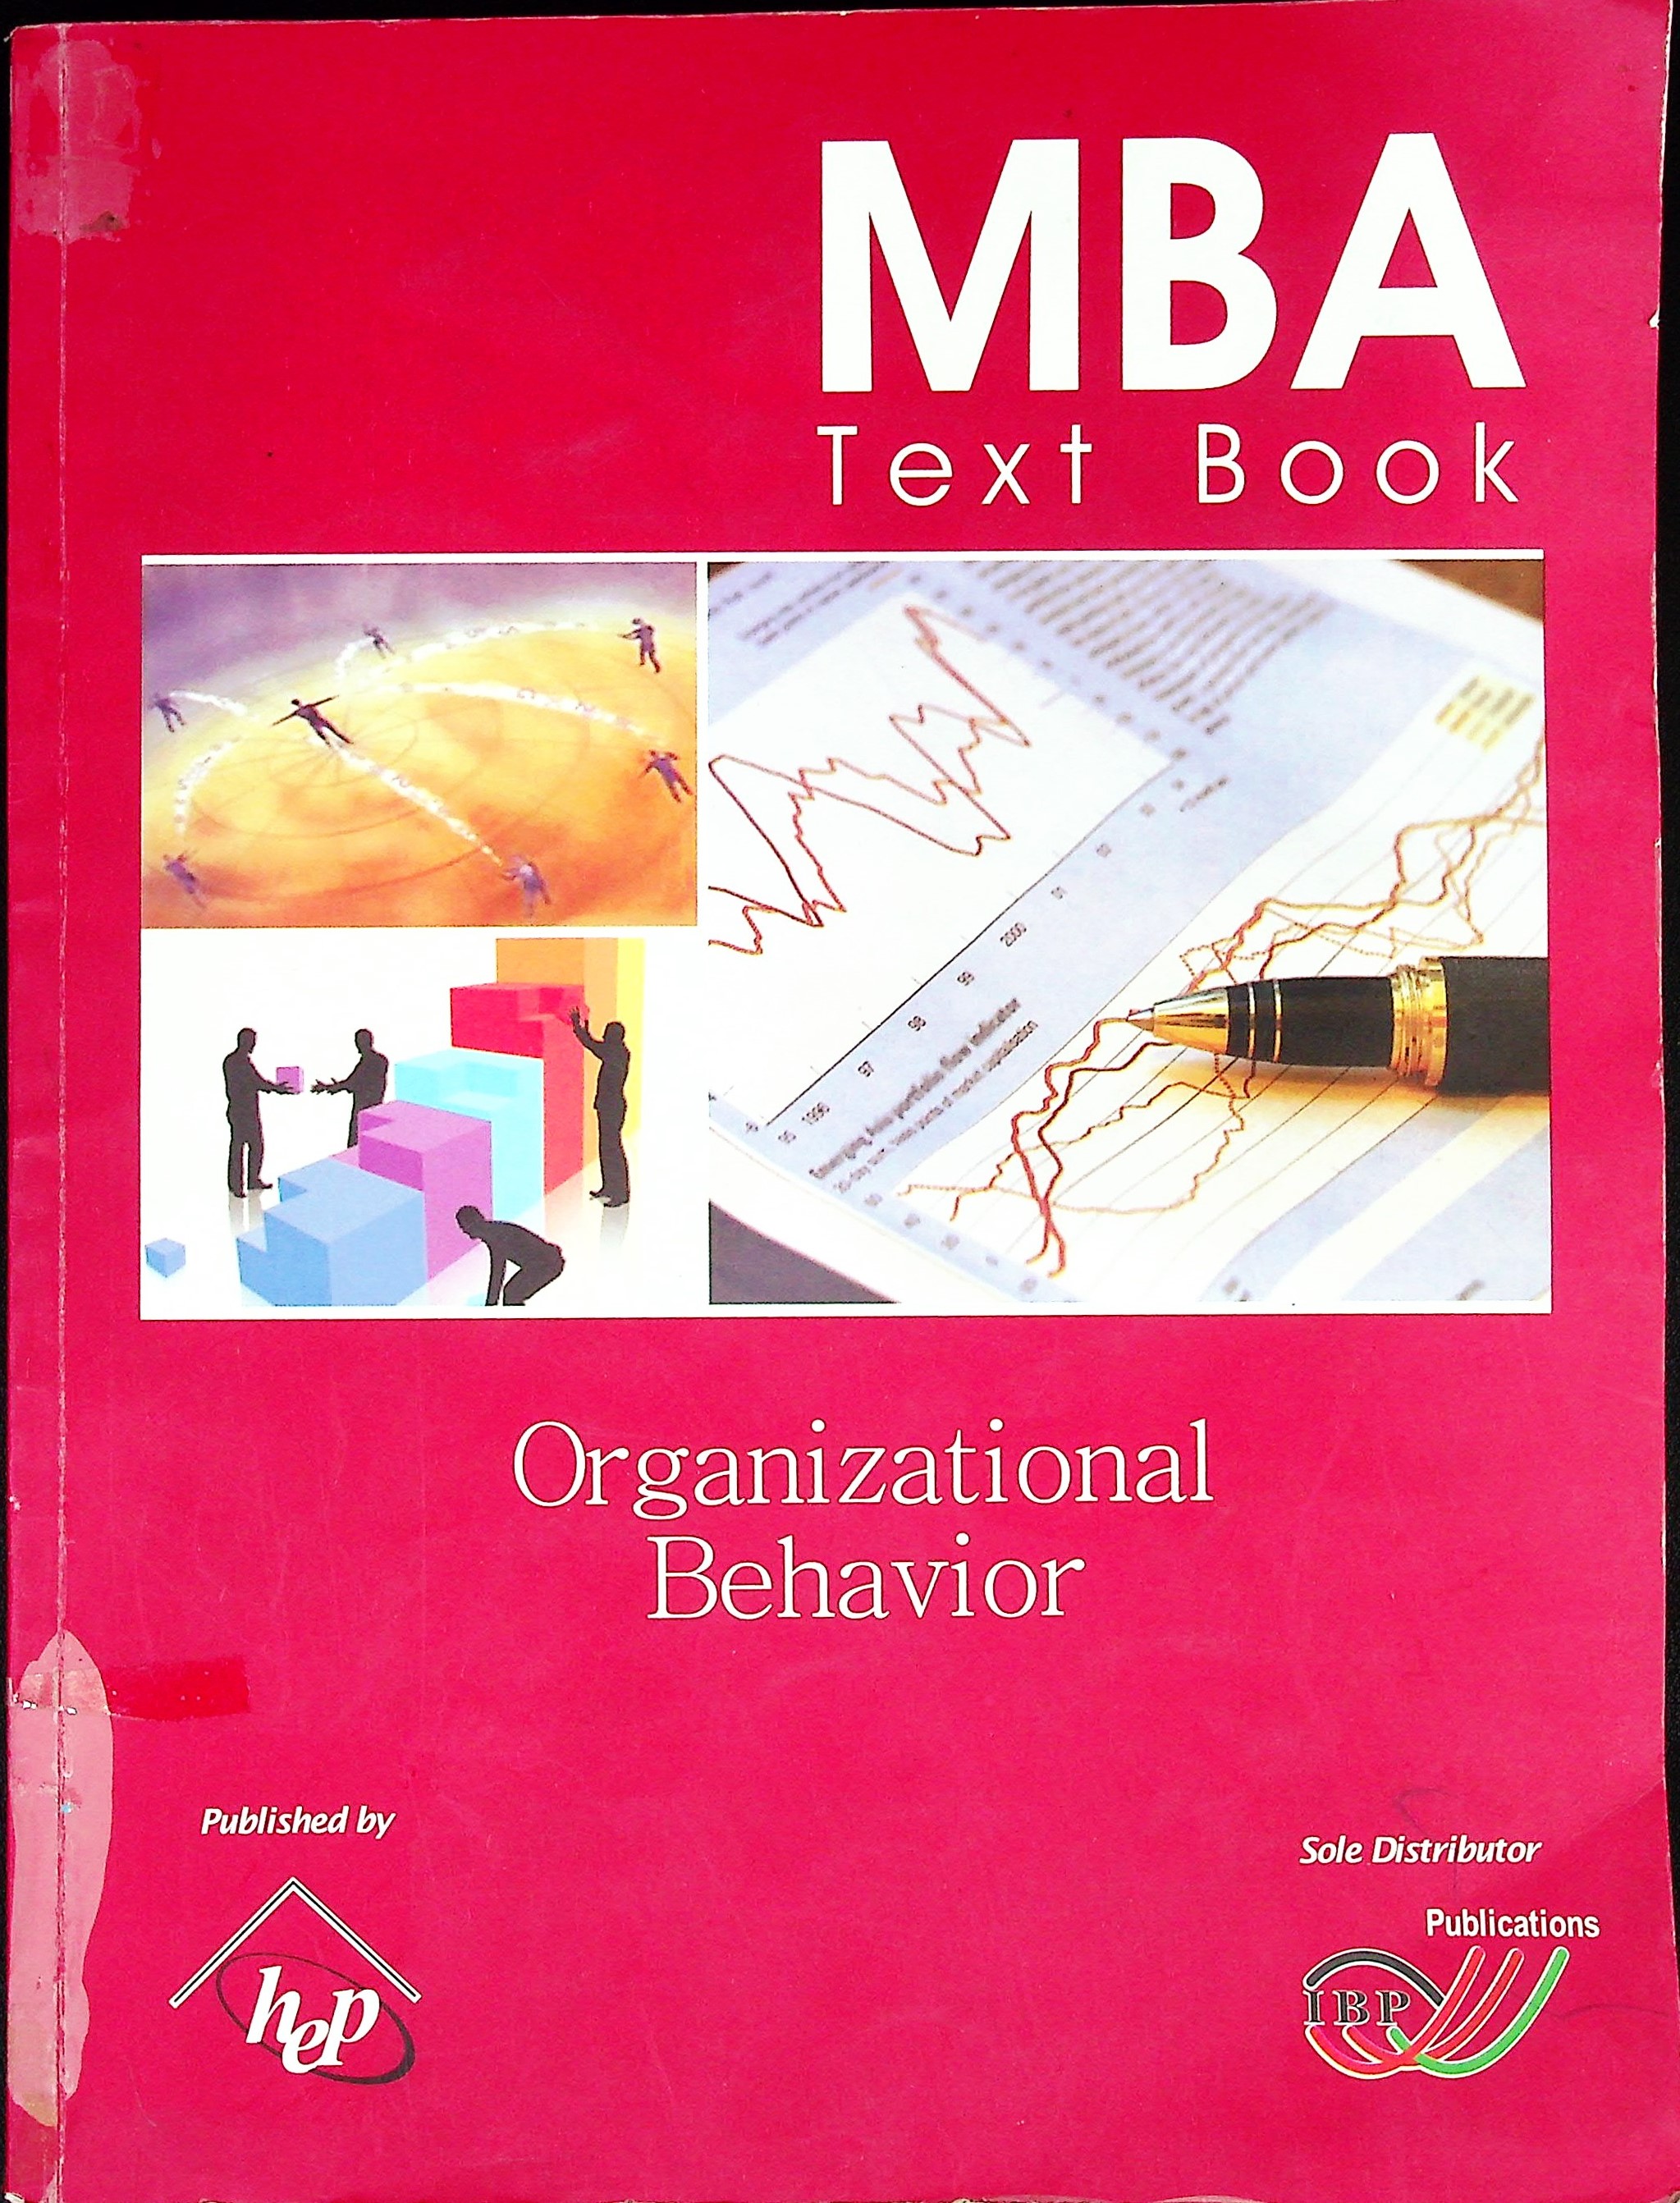 Organizational behavior :